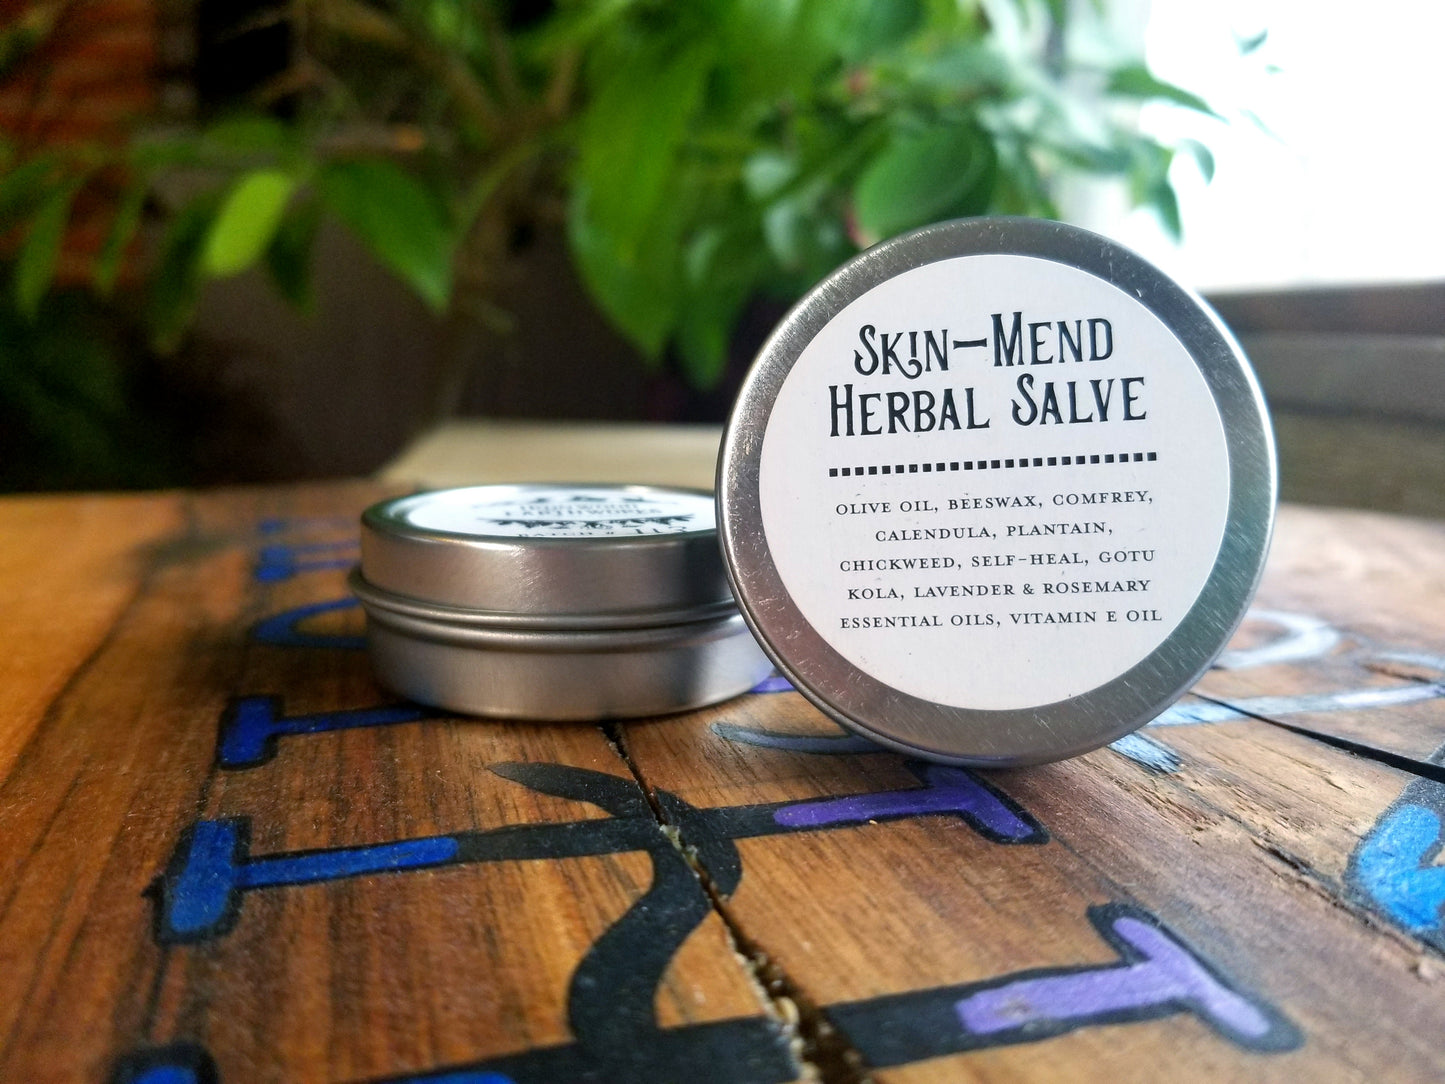 Skin-Mend Herbal Salve